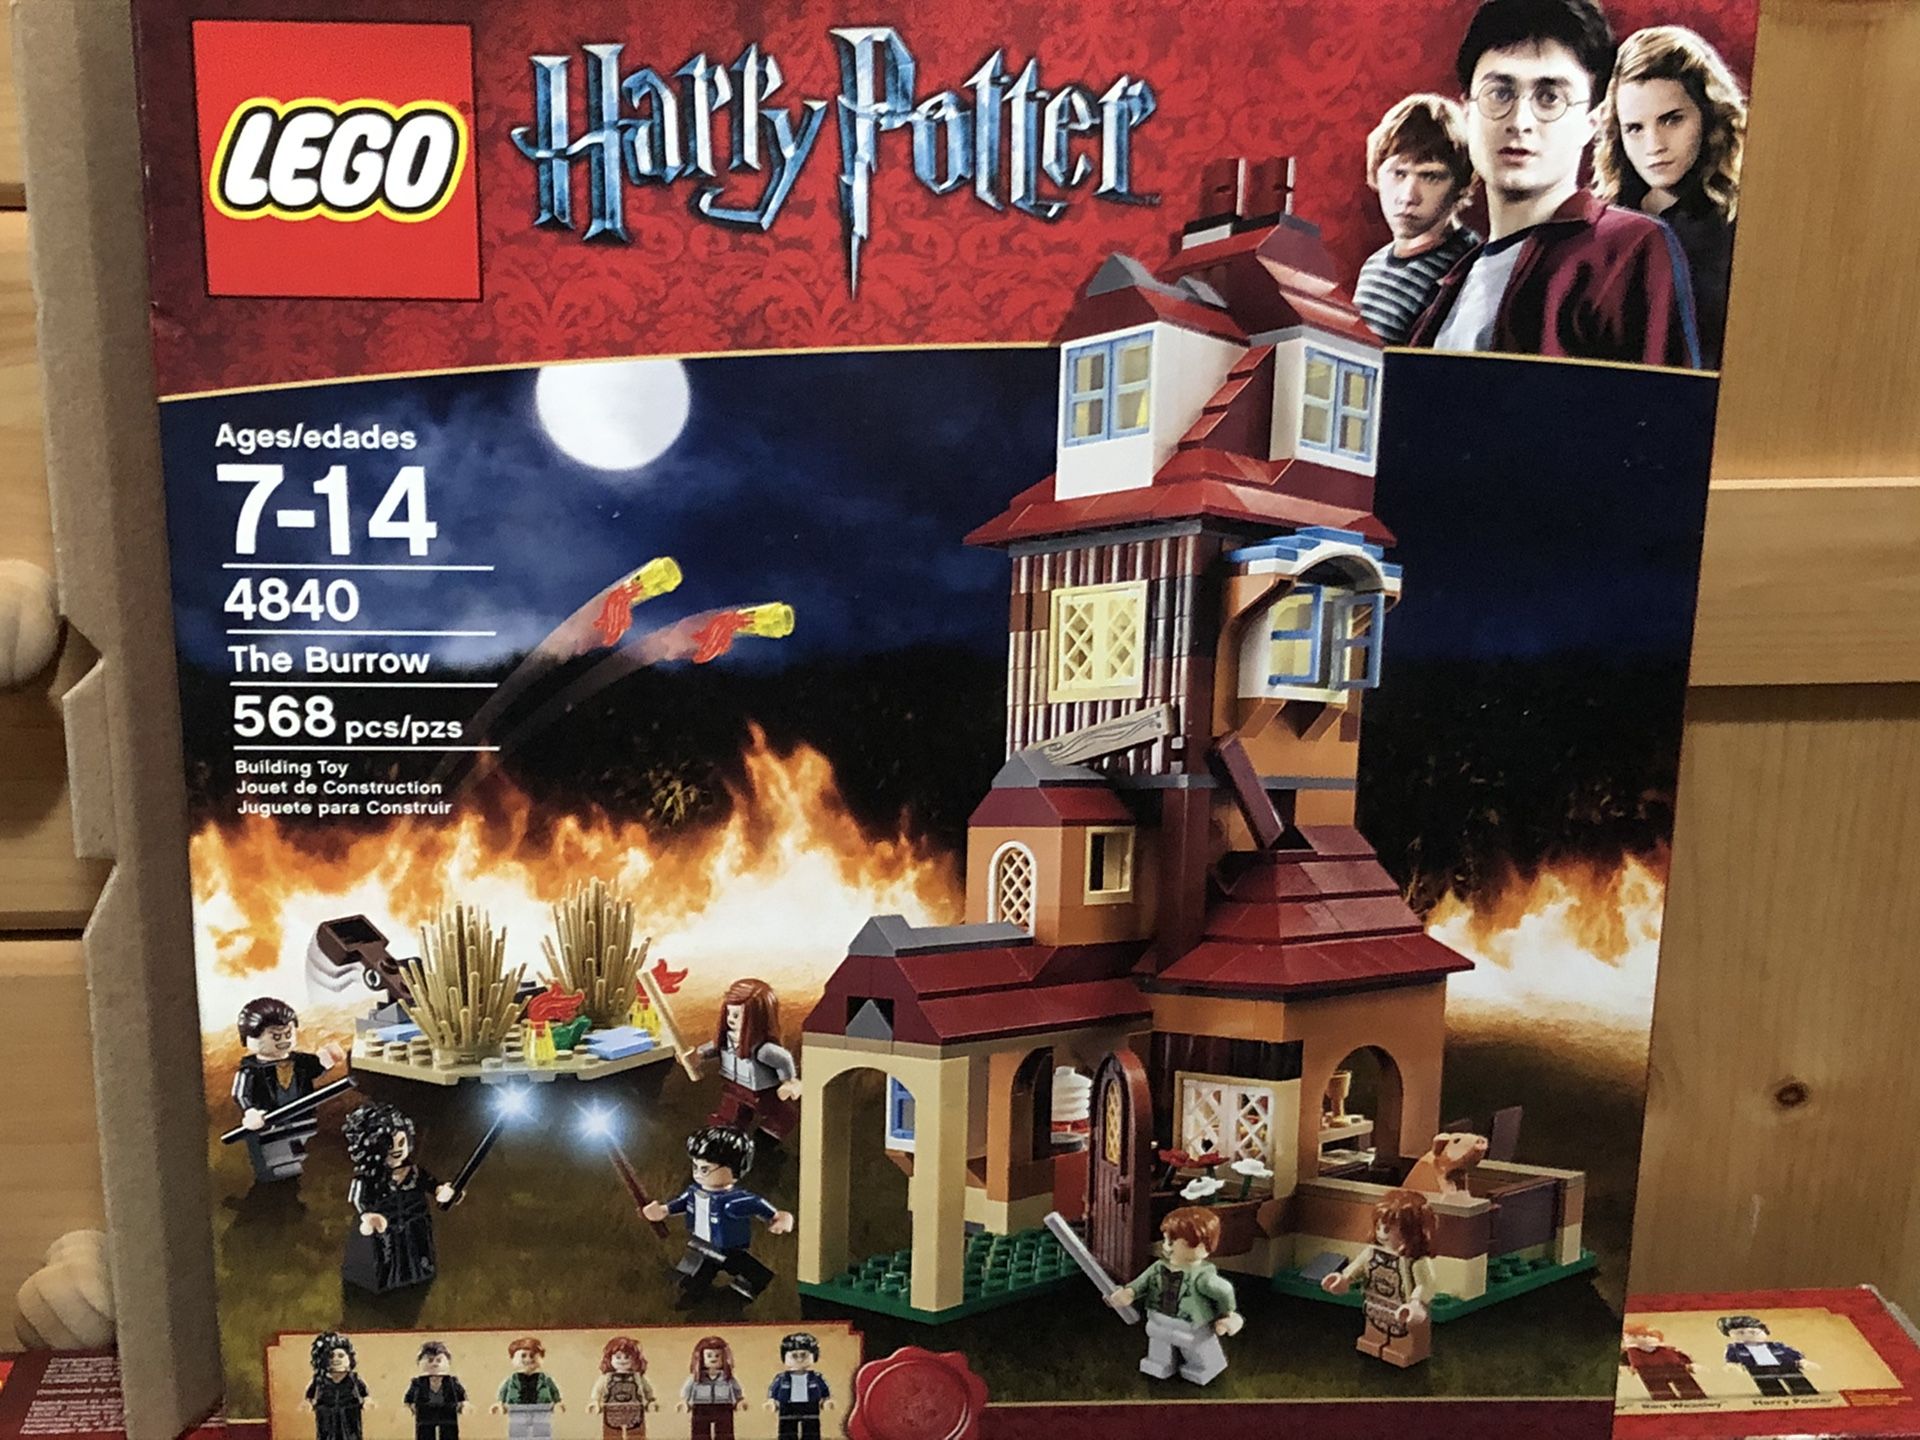 Retired - Harry Potter - The Burrow 2010 LEGO set